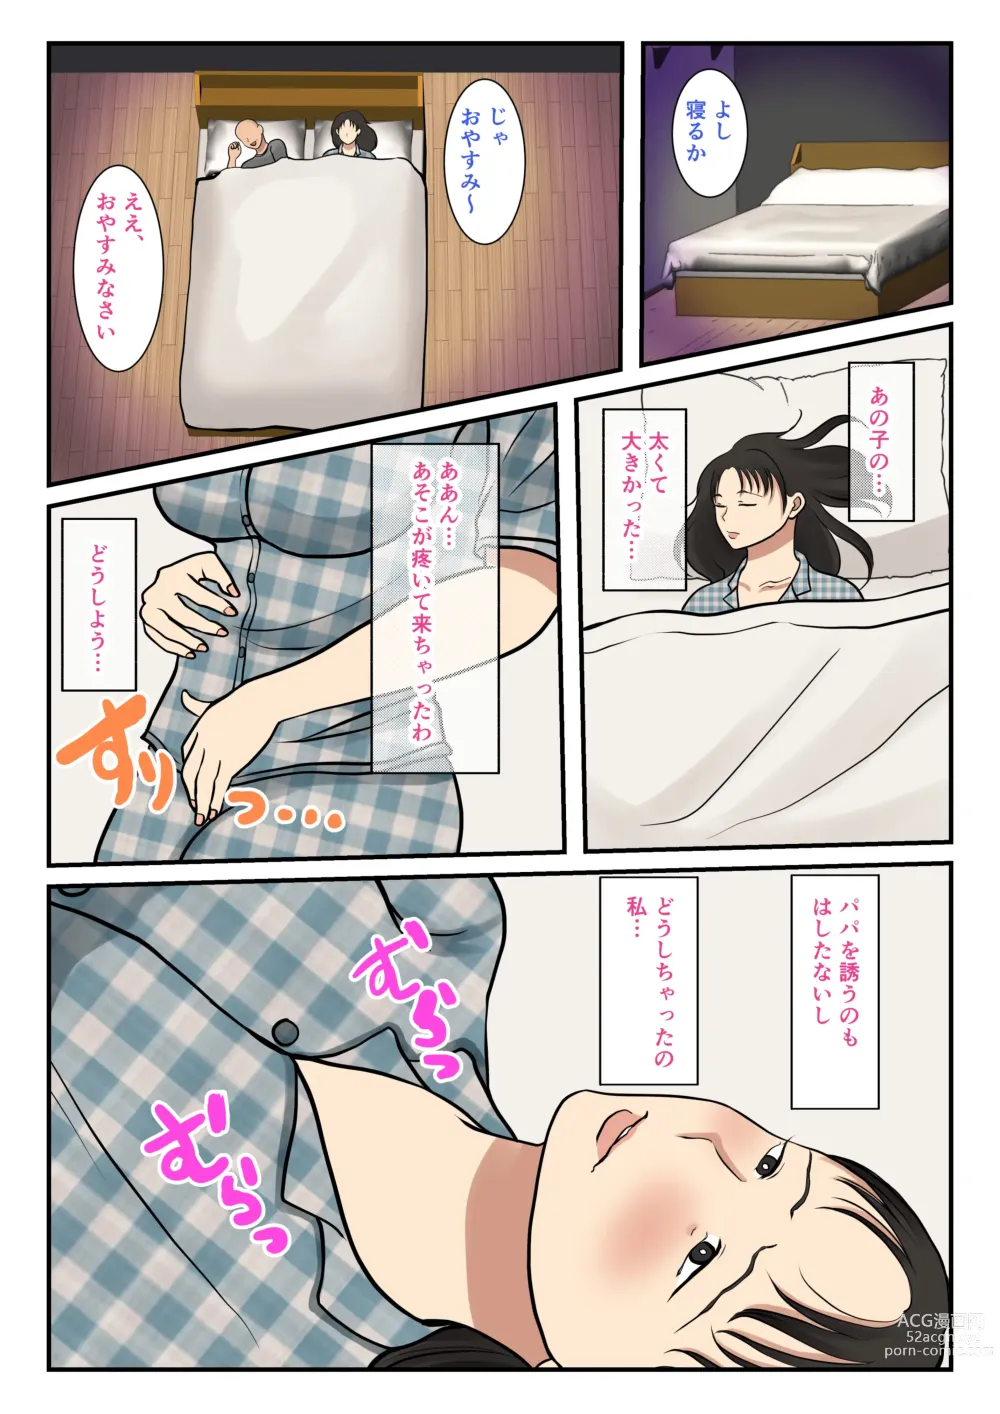 Page 21 of doujinshi Kaseifu Yondara Haha ga Kita